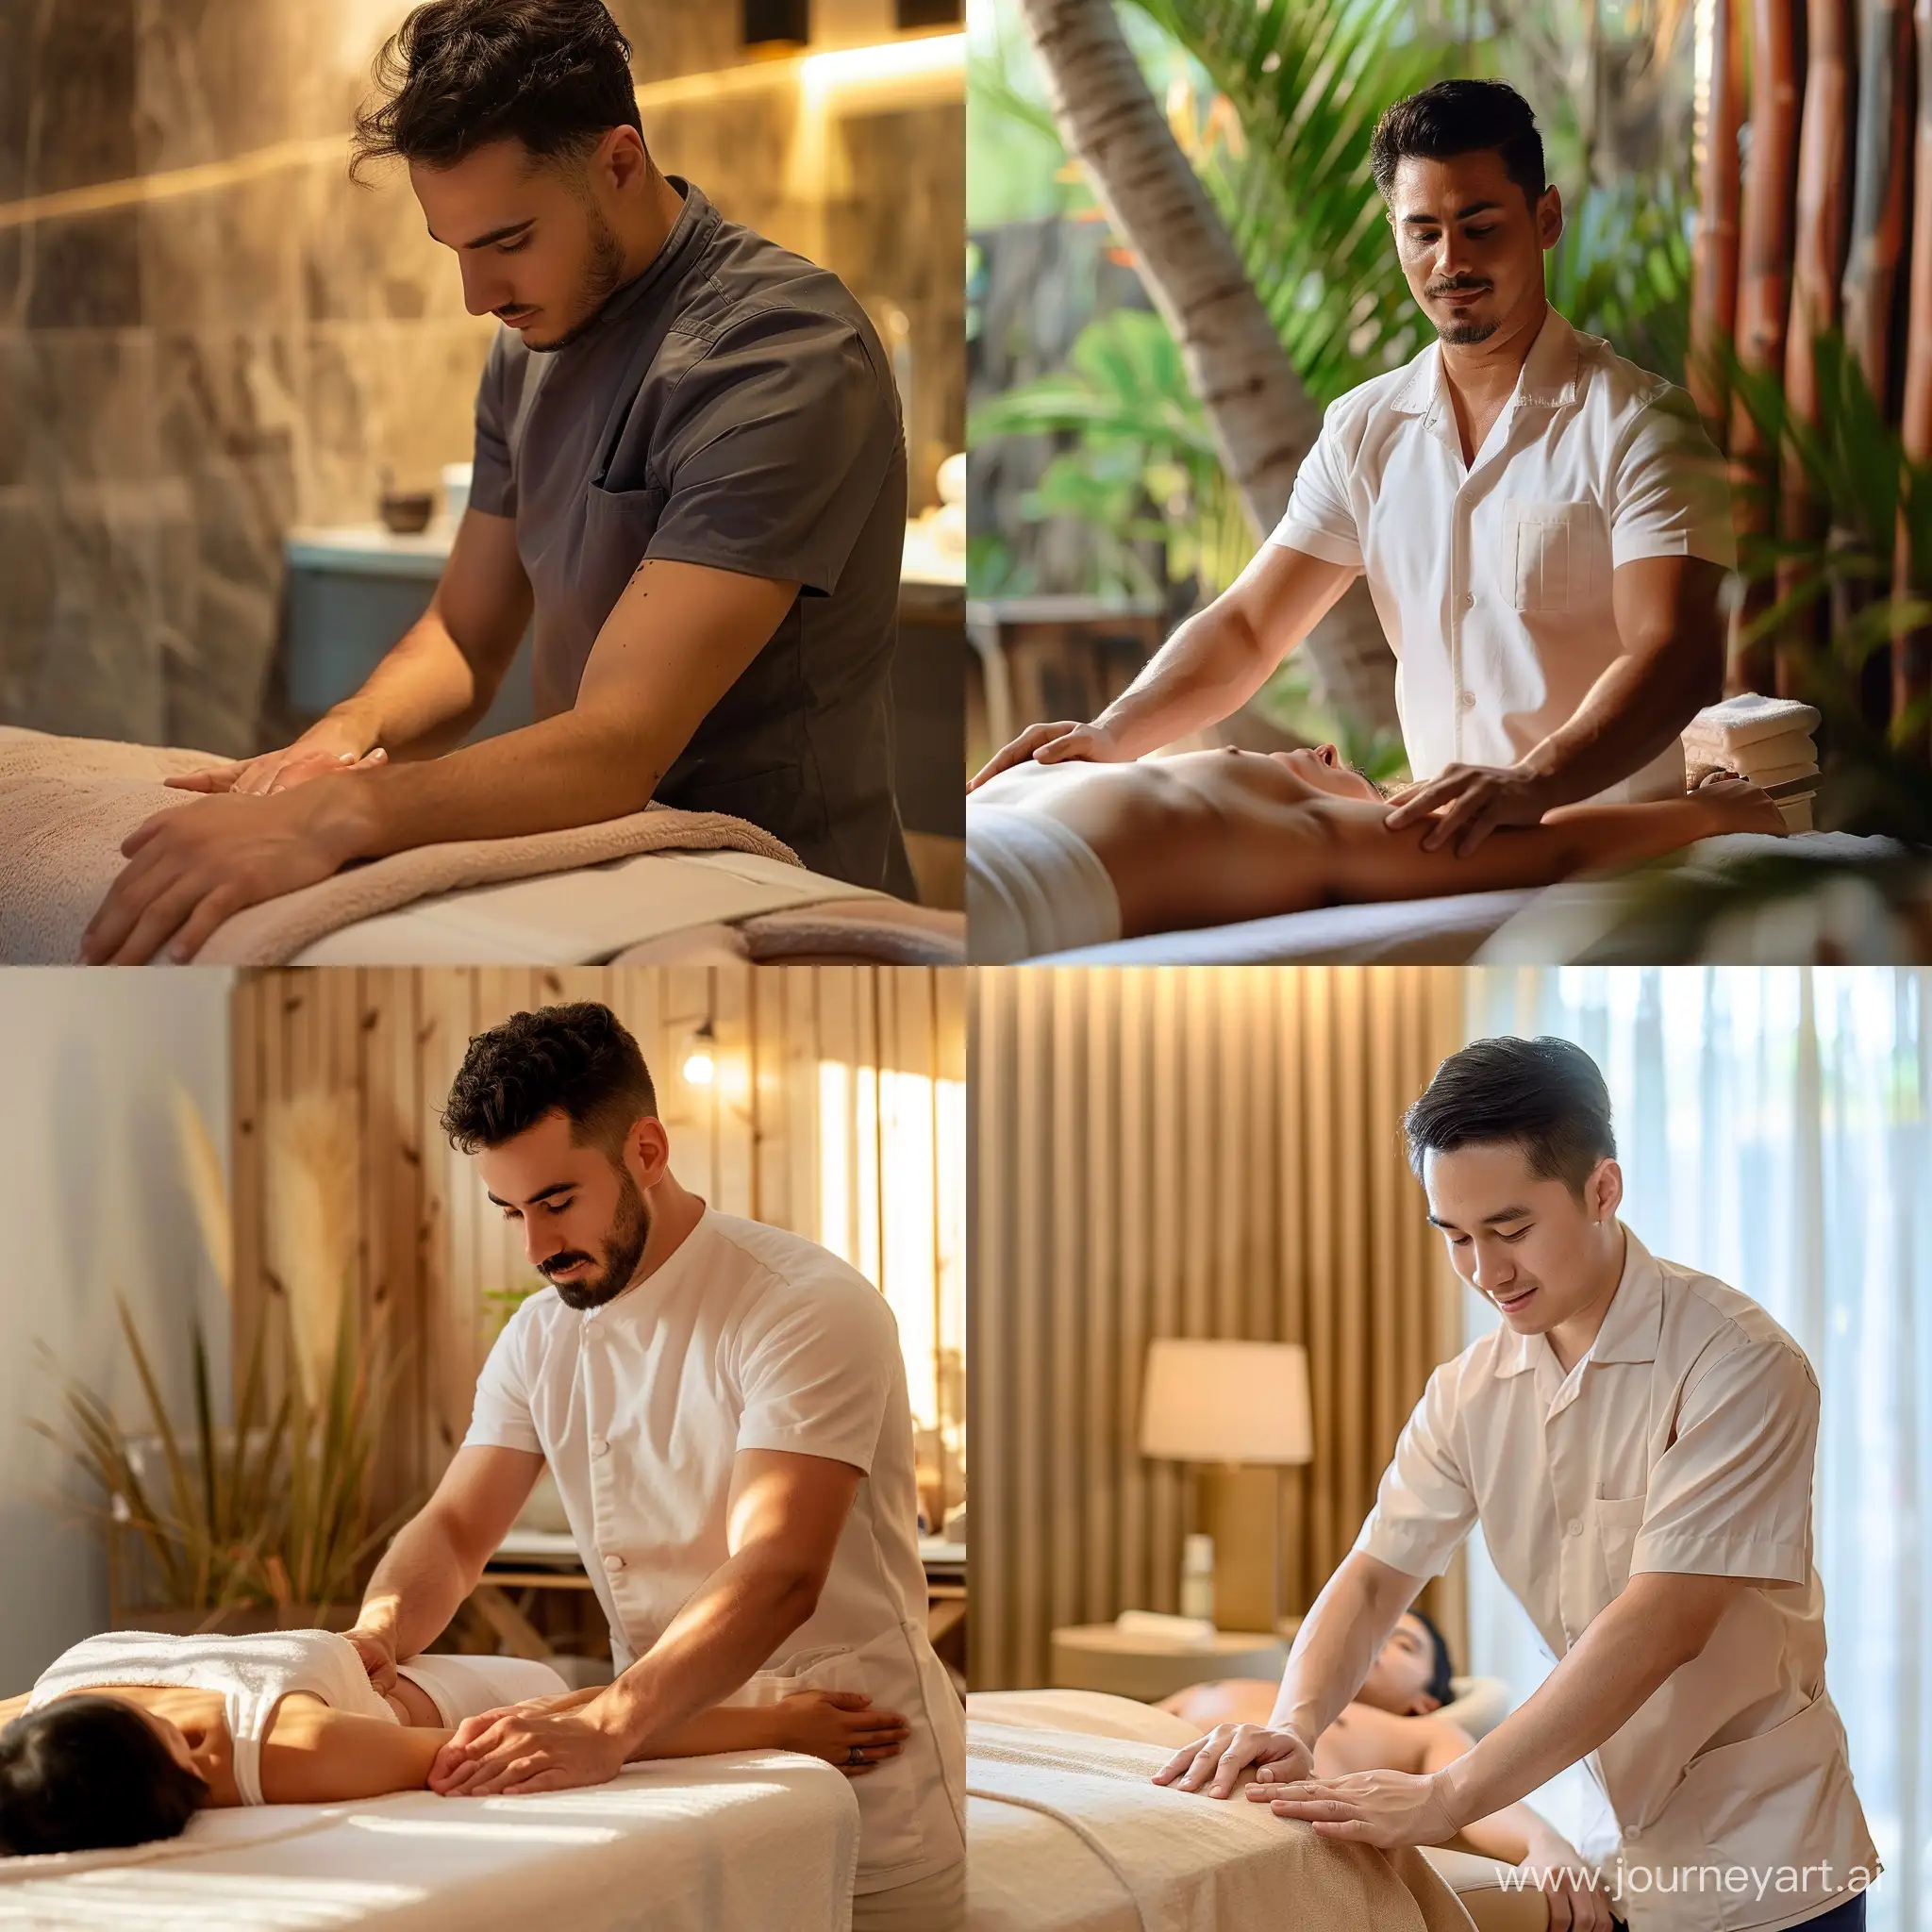 Professional-Male-Masseur-Providing-Relaxing-Massage-on-Massage-Table